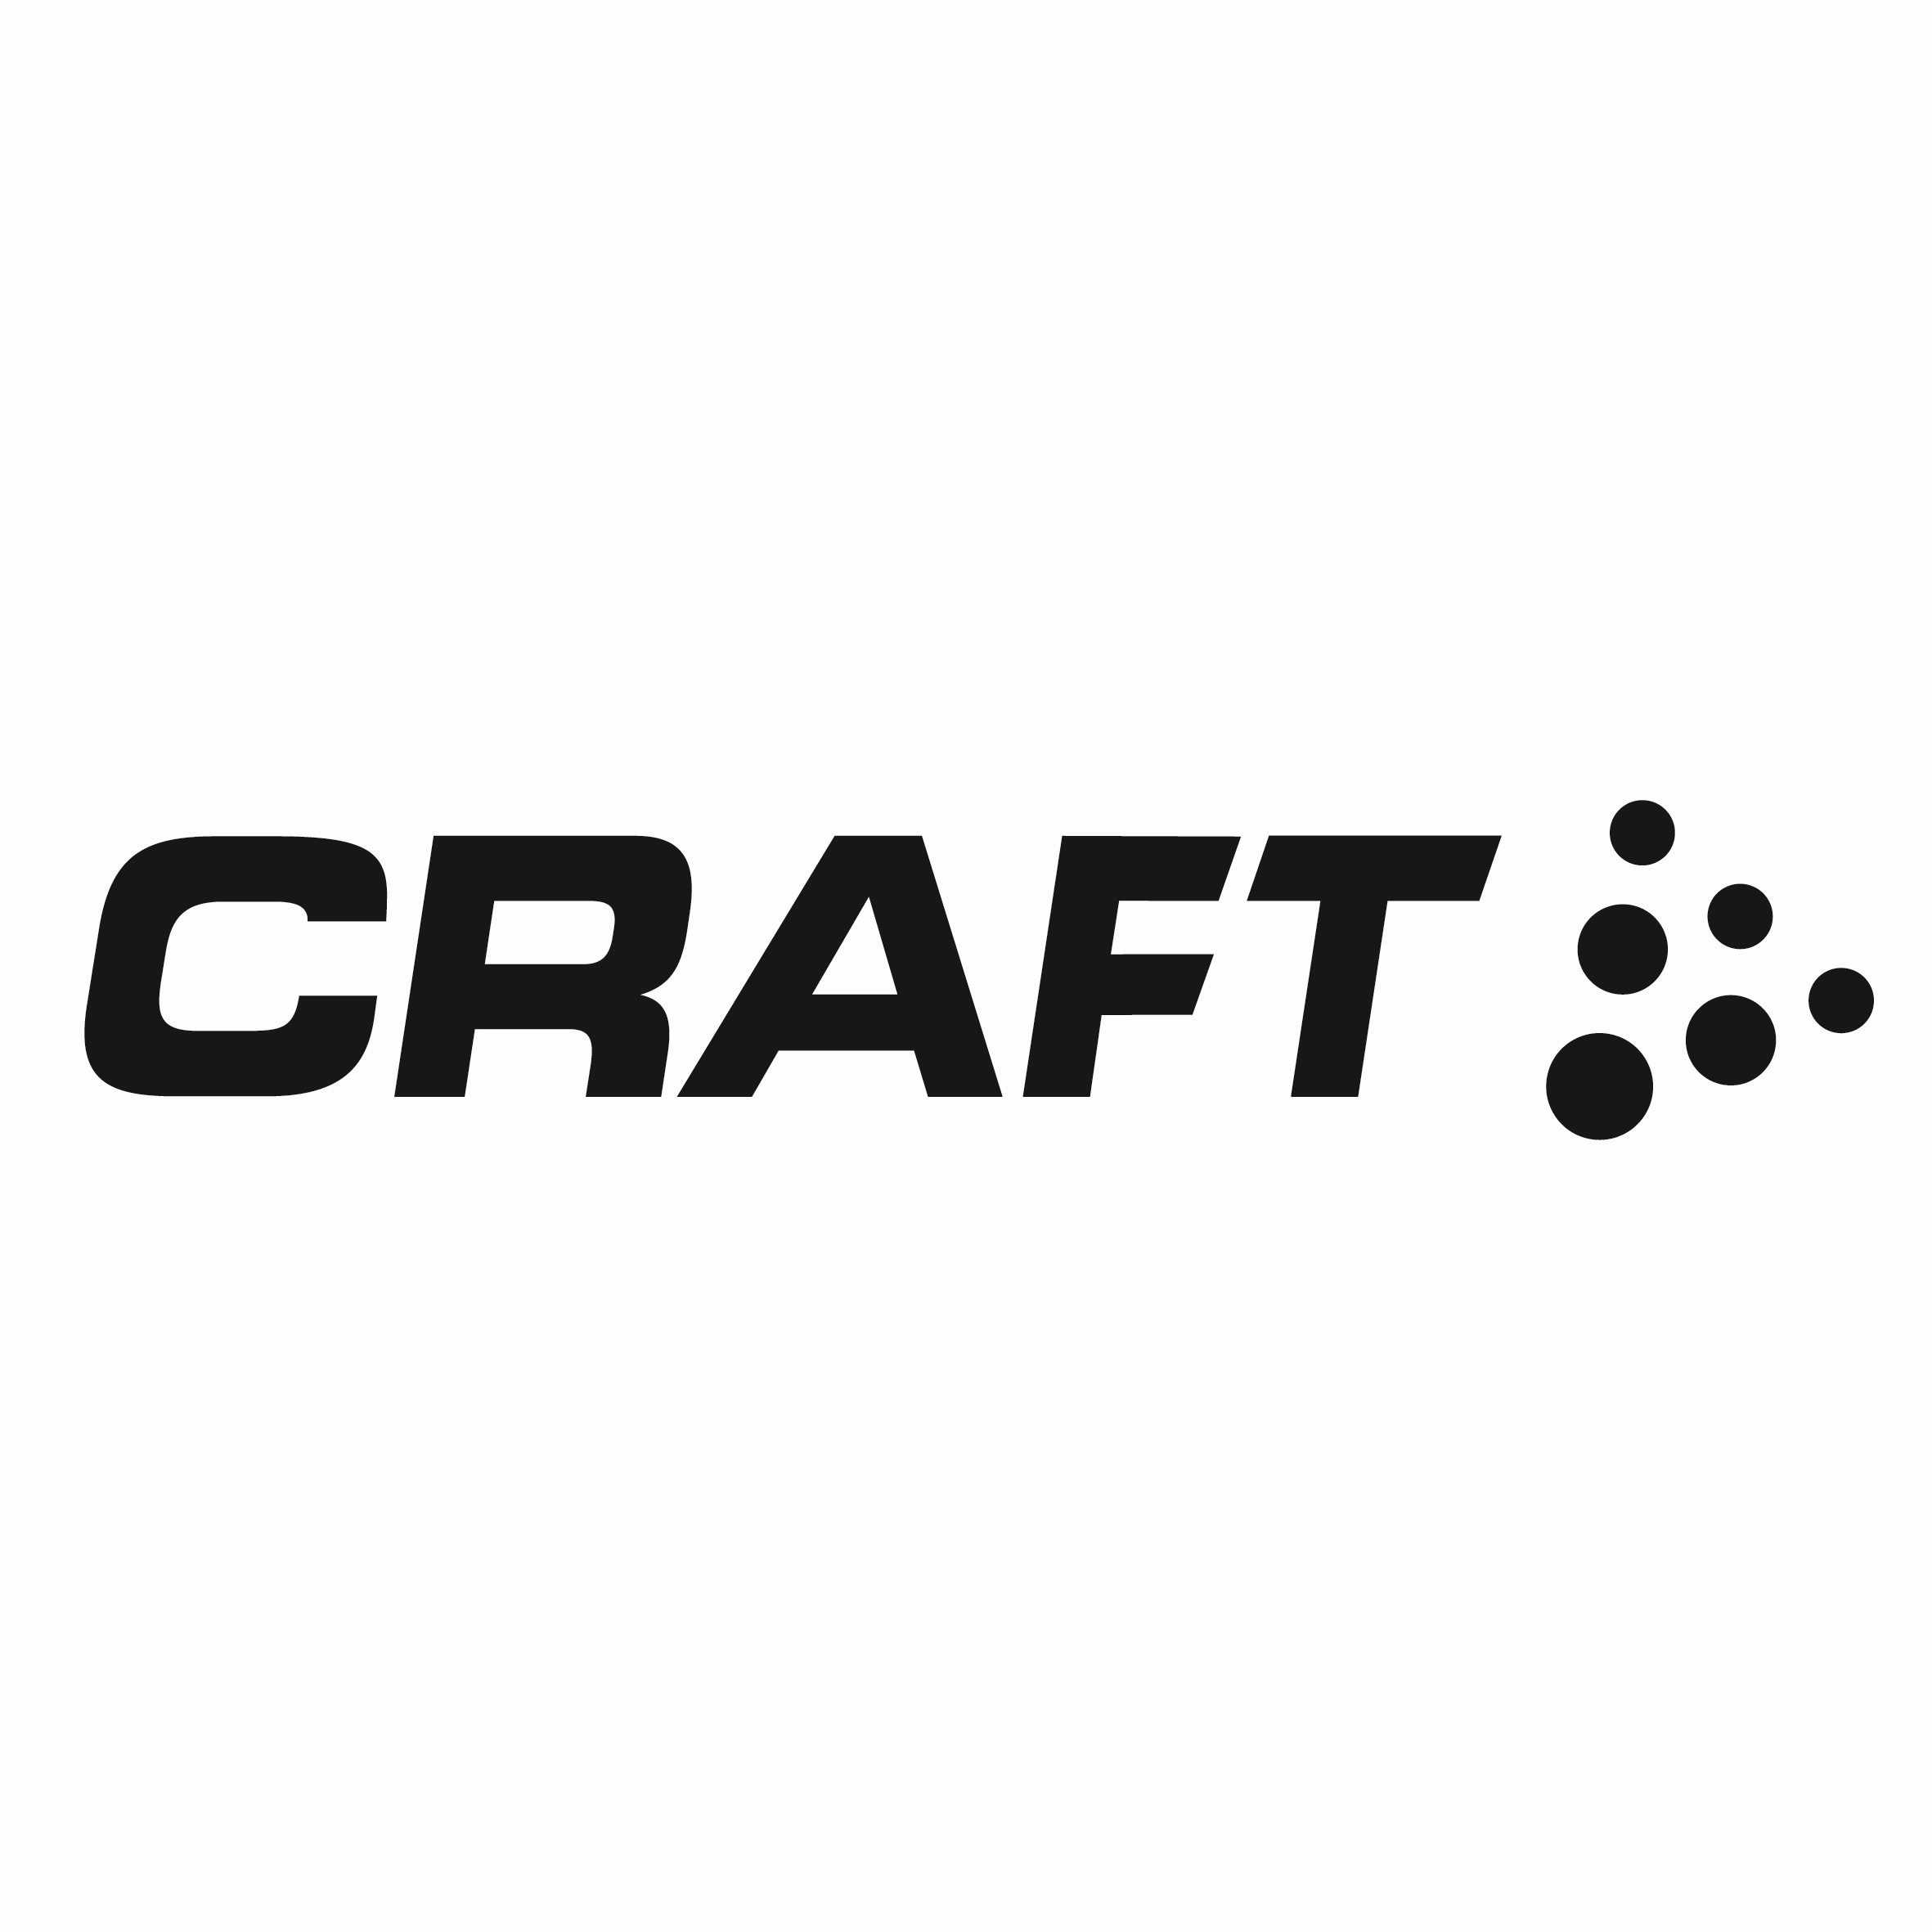 Craft logo 2020.jpg